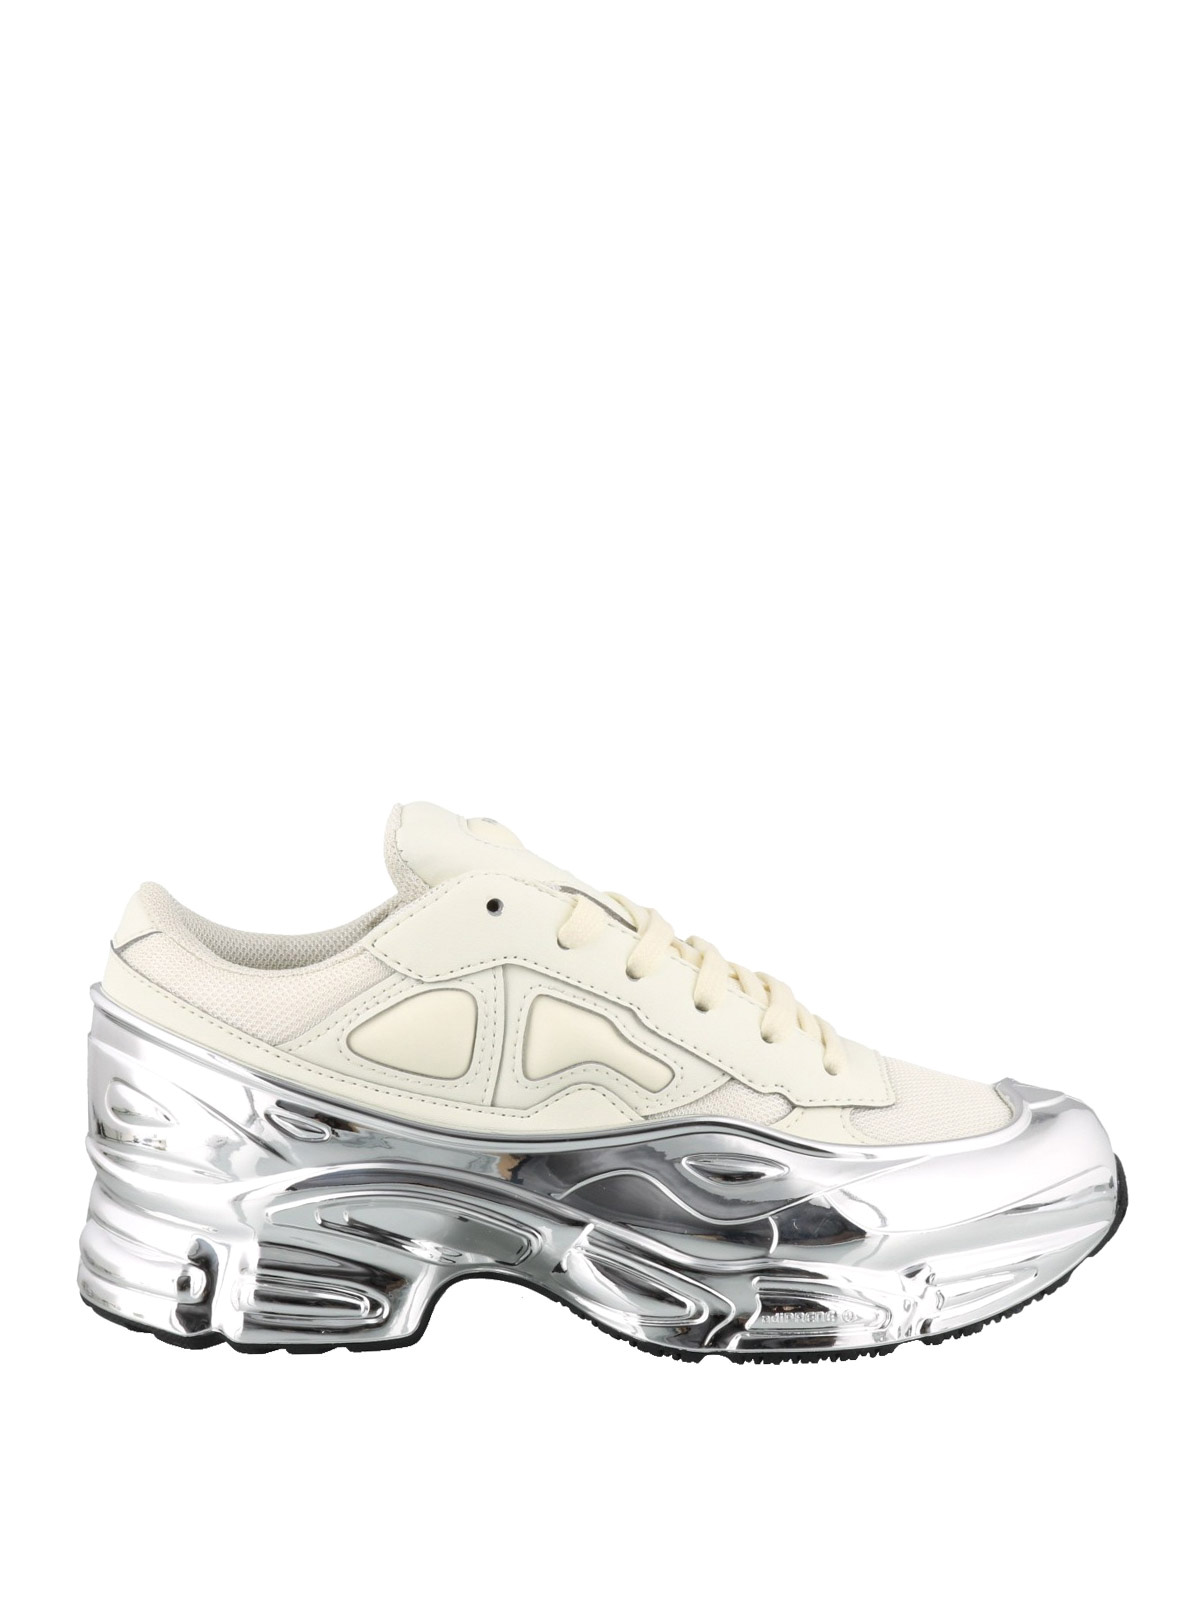 Raf Simons Adidas - Sneaker Ozweego RS bianche e argento - sneakers -  EE7945WHITESILVERSILVER